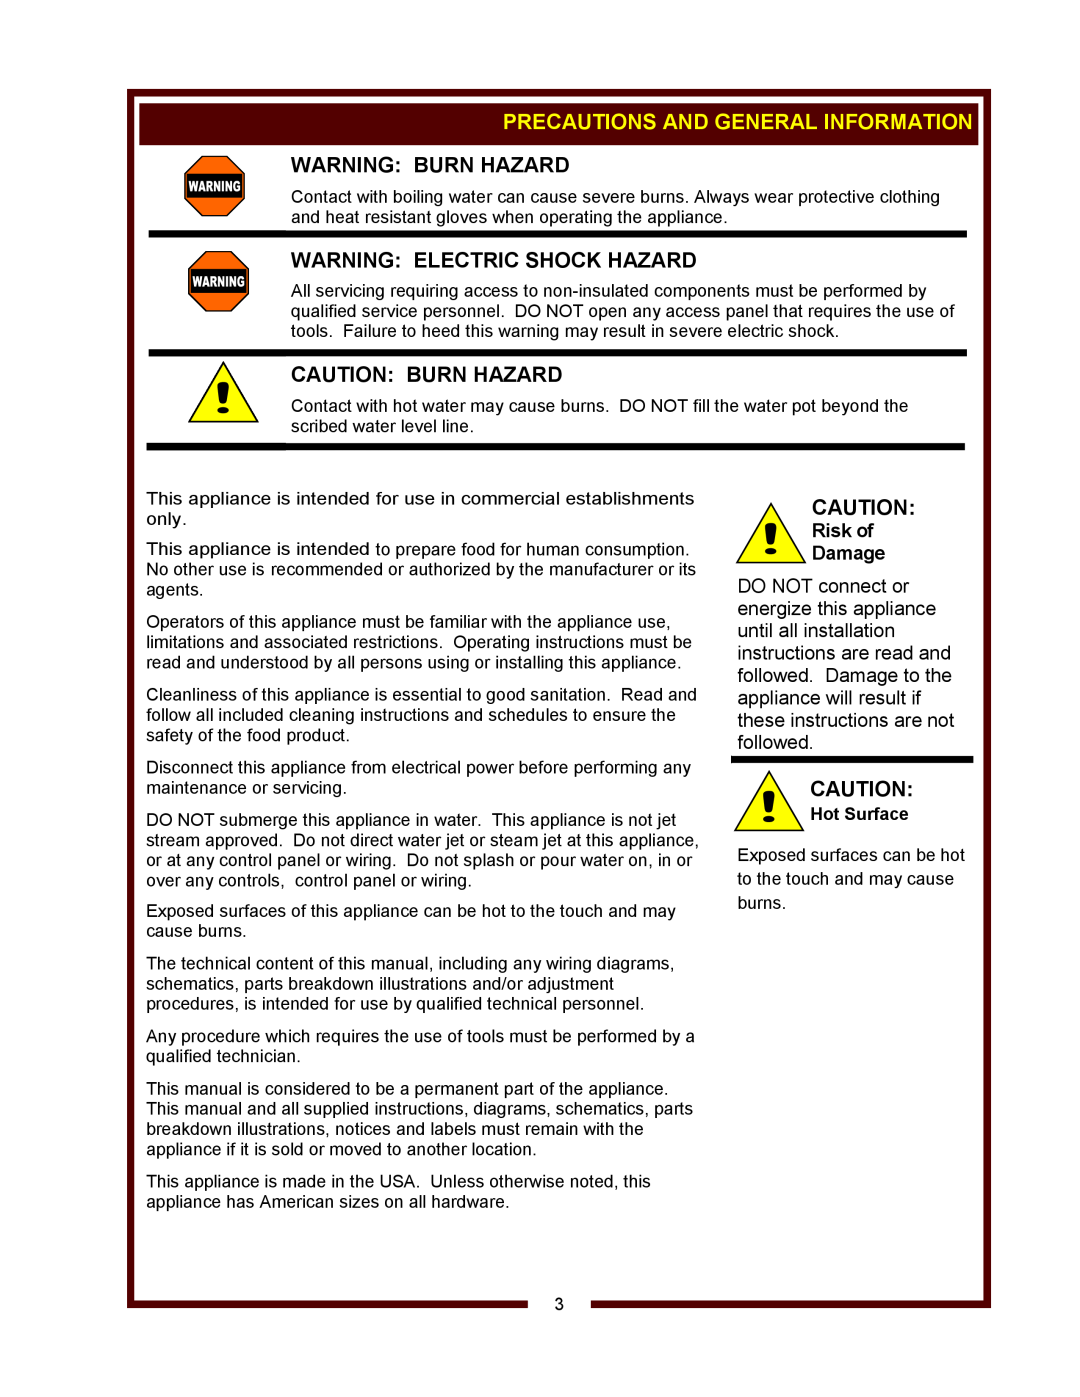 Wells F-49RT Precautions And General Information, Warning Burn Hazard, Warning Electric Shock Hazard, Caution Burn Hazard 